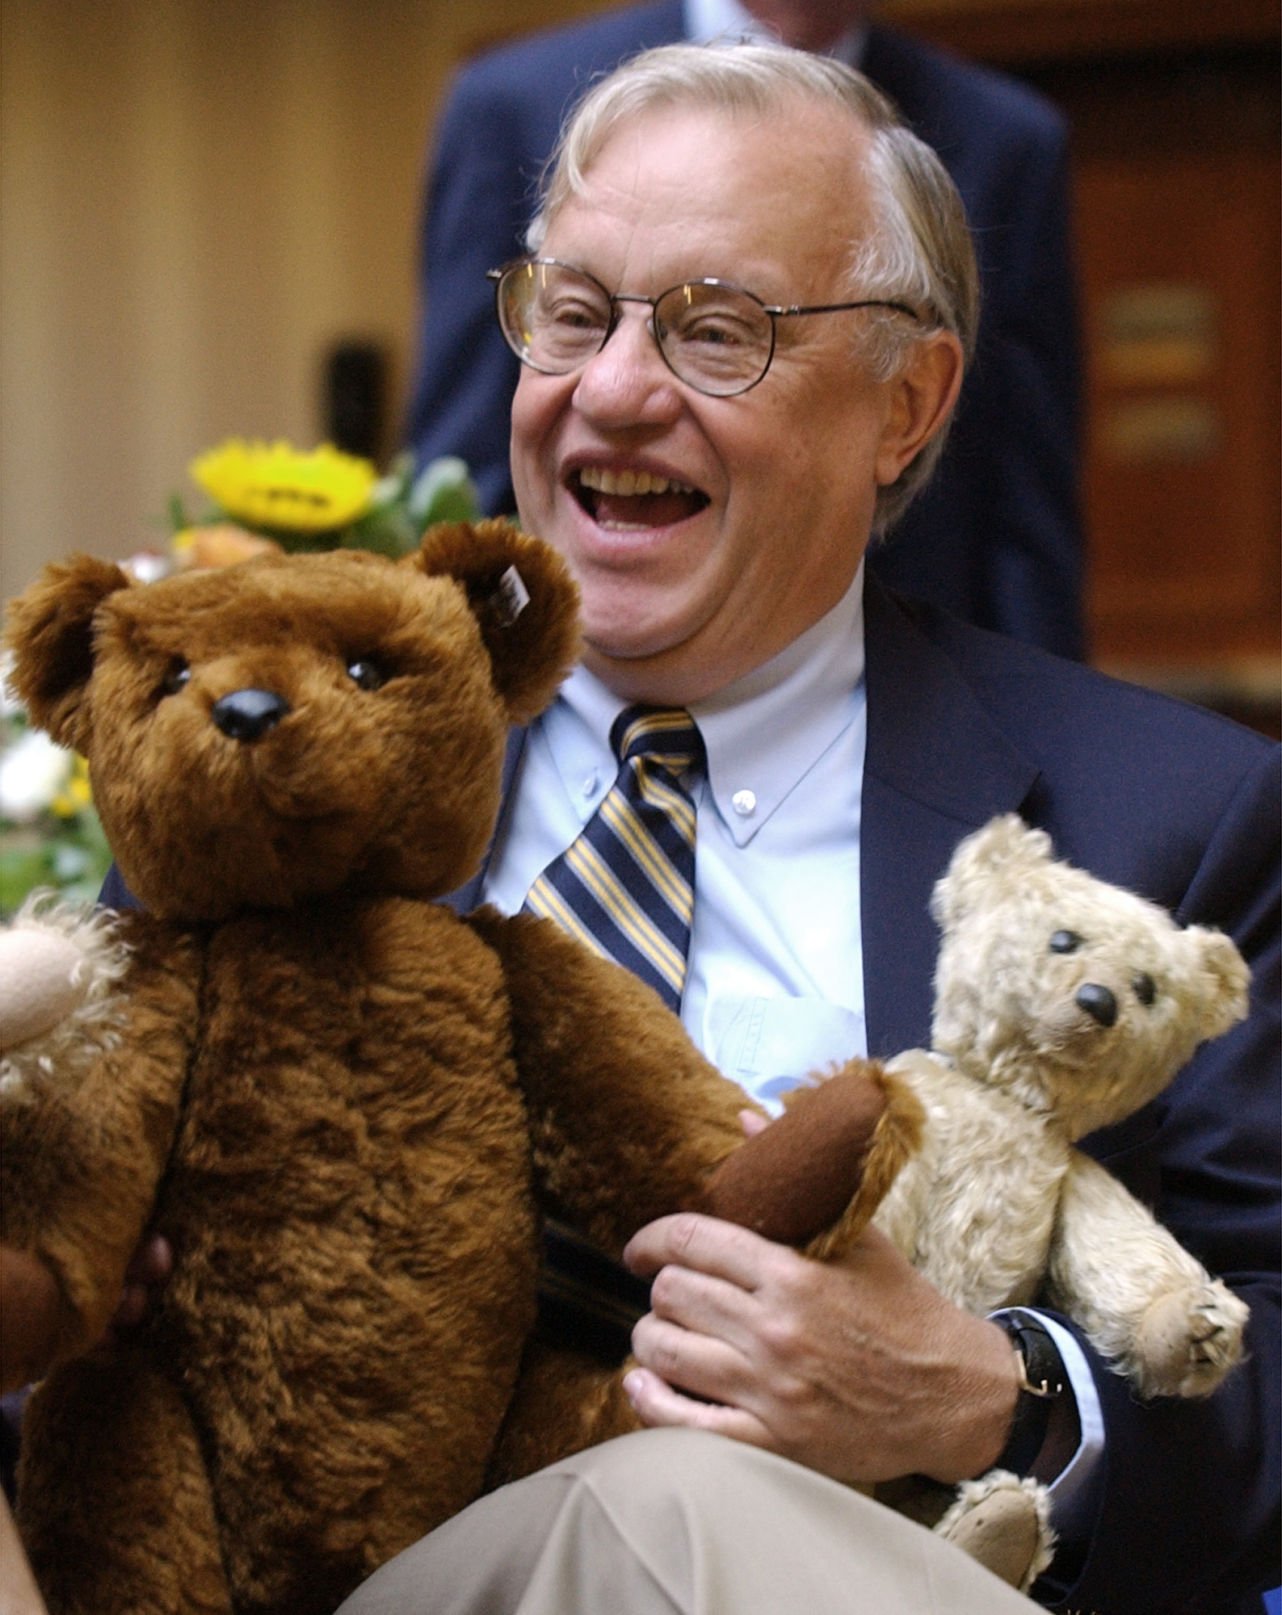 teddy bear president